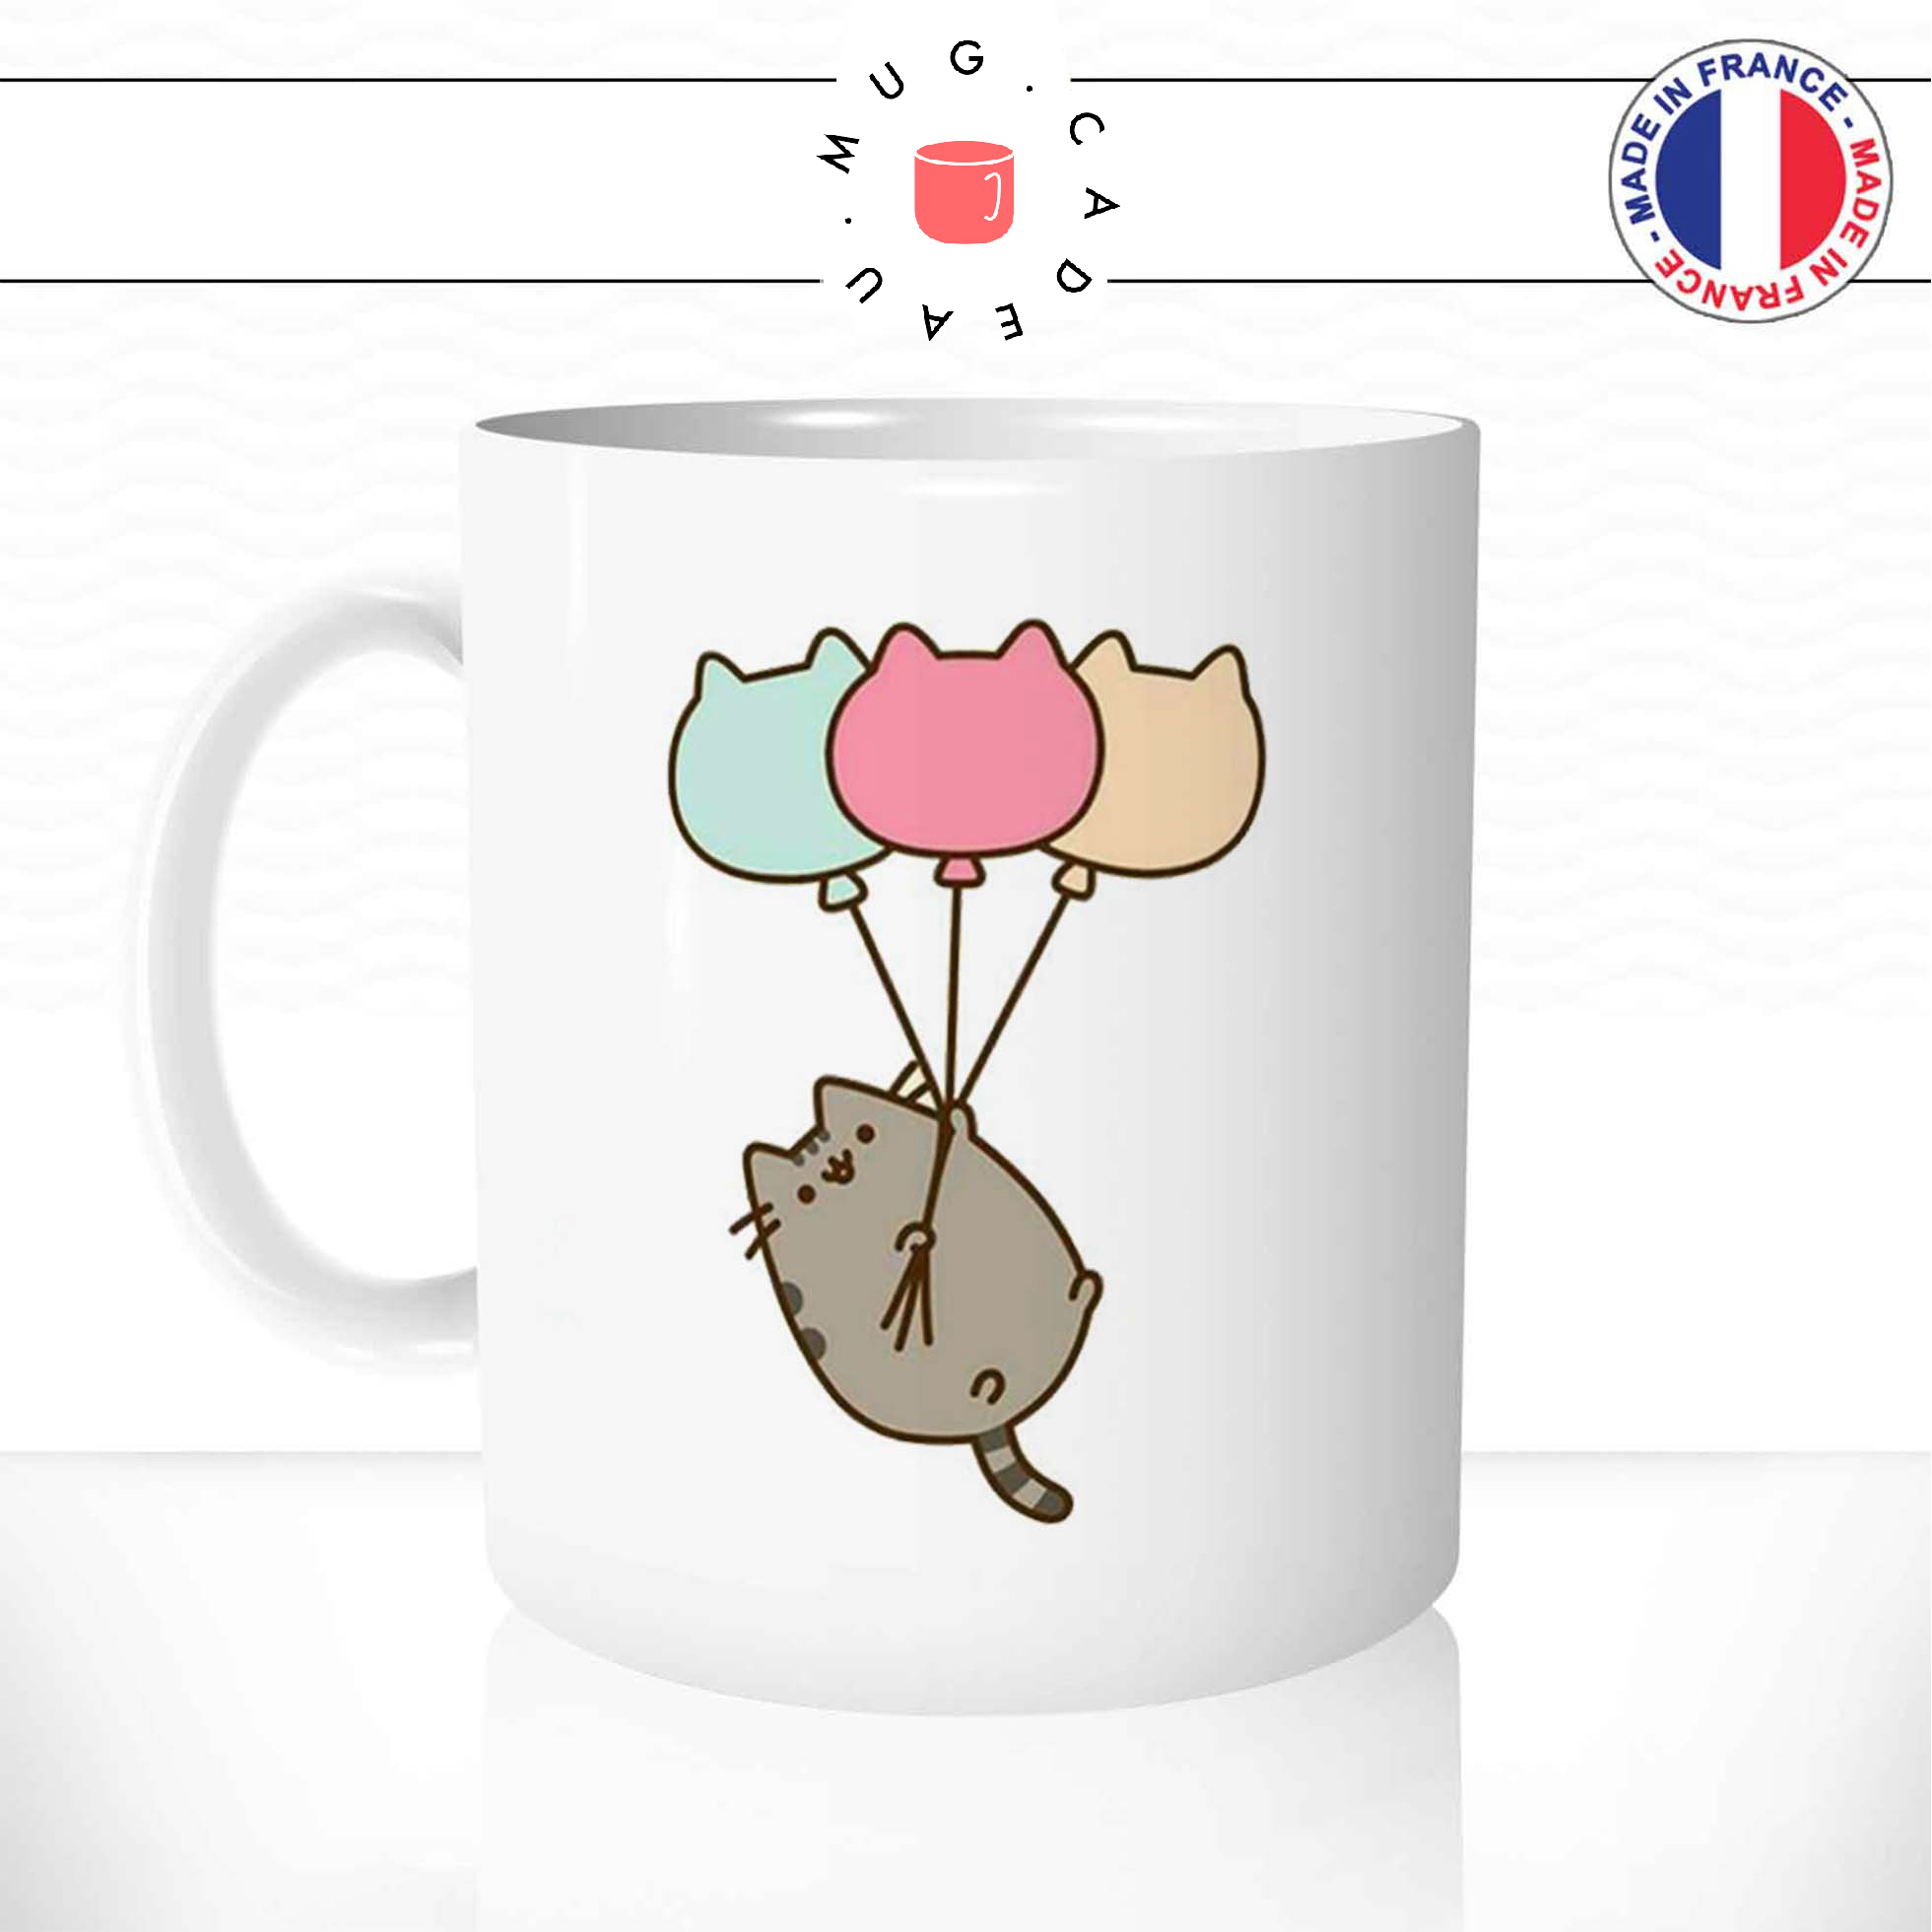 mug-tasse-ref6-chat-kawaii-balons-couleurs-cafe-the-tasses-mugs-personnalise-anse-gauche